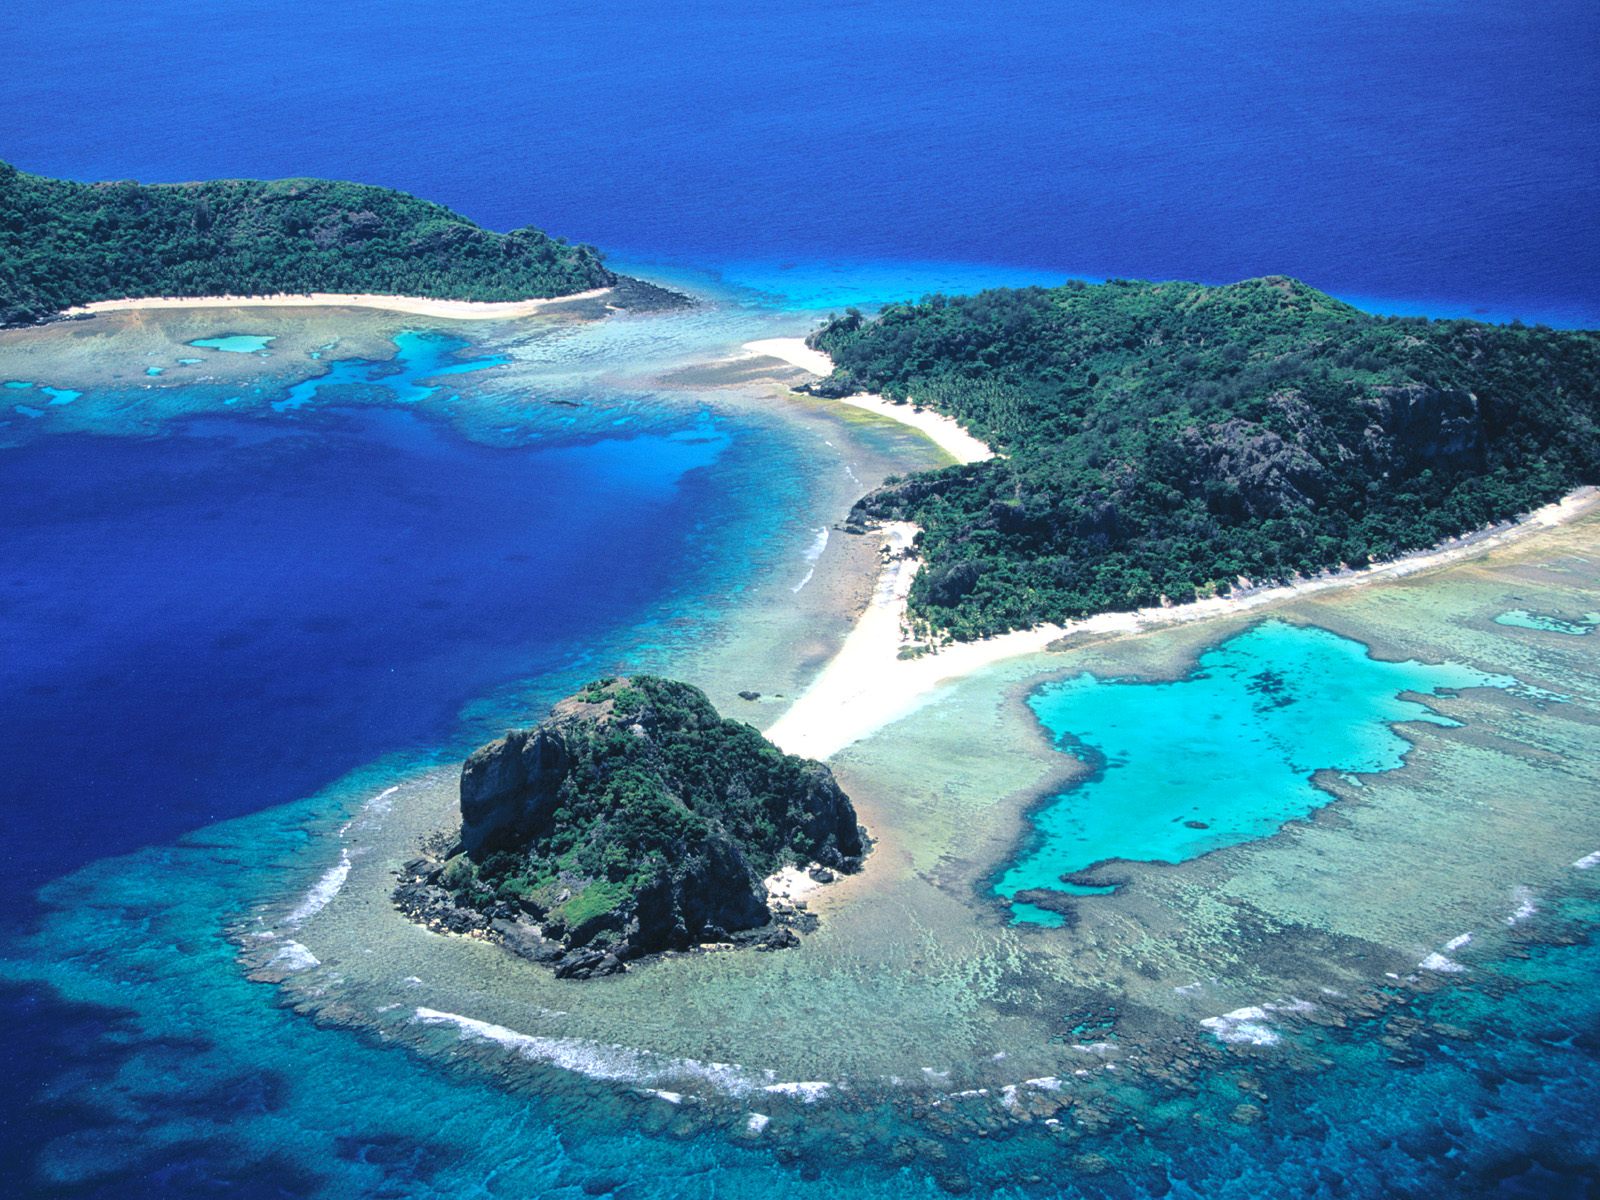 http://www.citypictures.org/data/media/223/Vanua_Levu_and_Navadra_Islands_Fiji.jpg